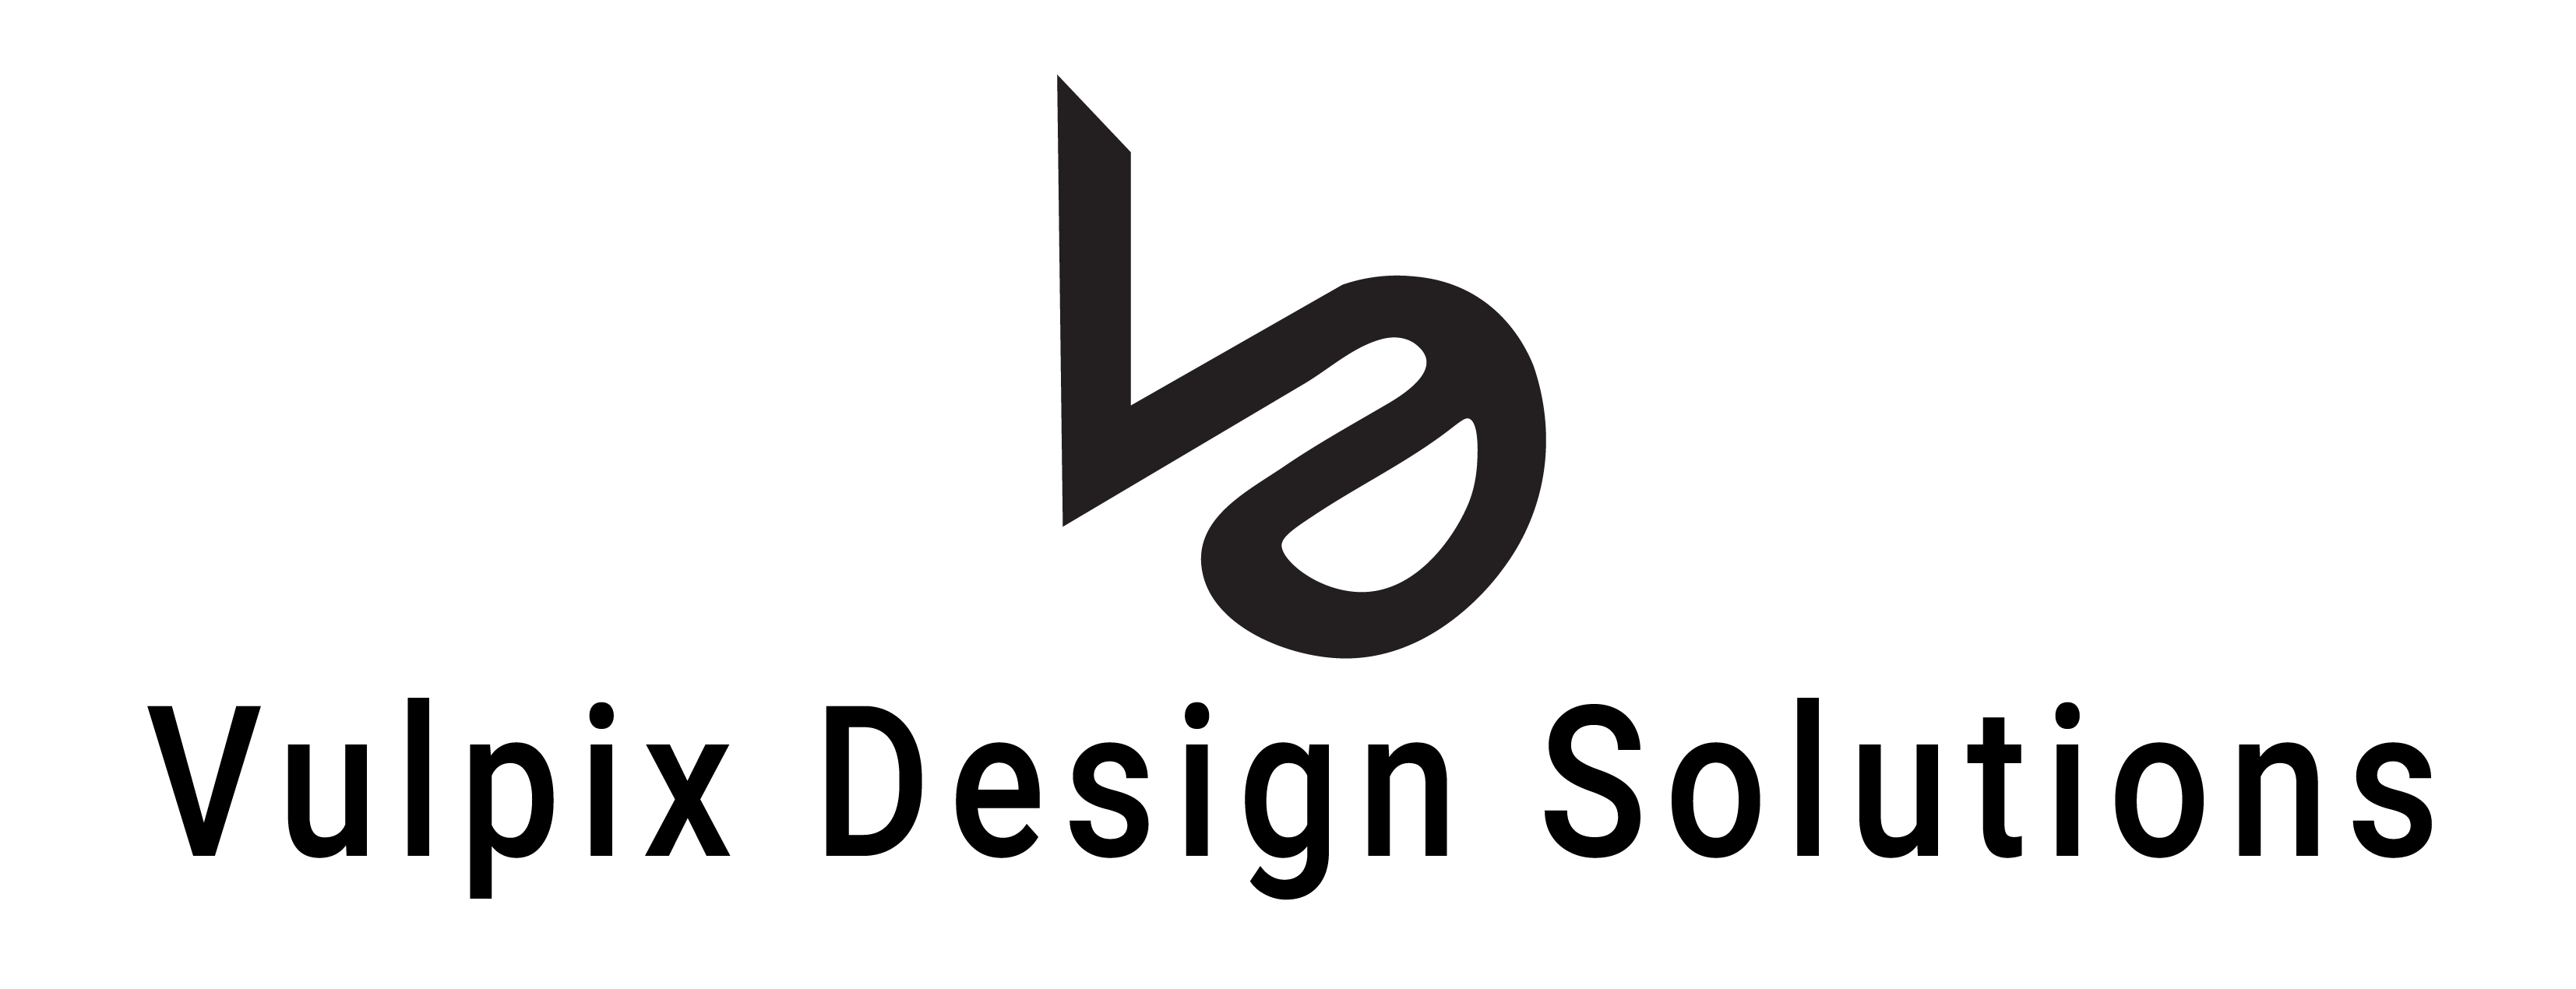 Vulpix Design Solutions